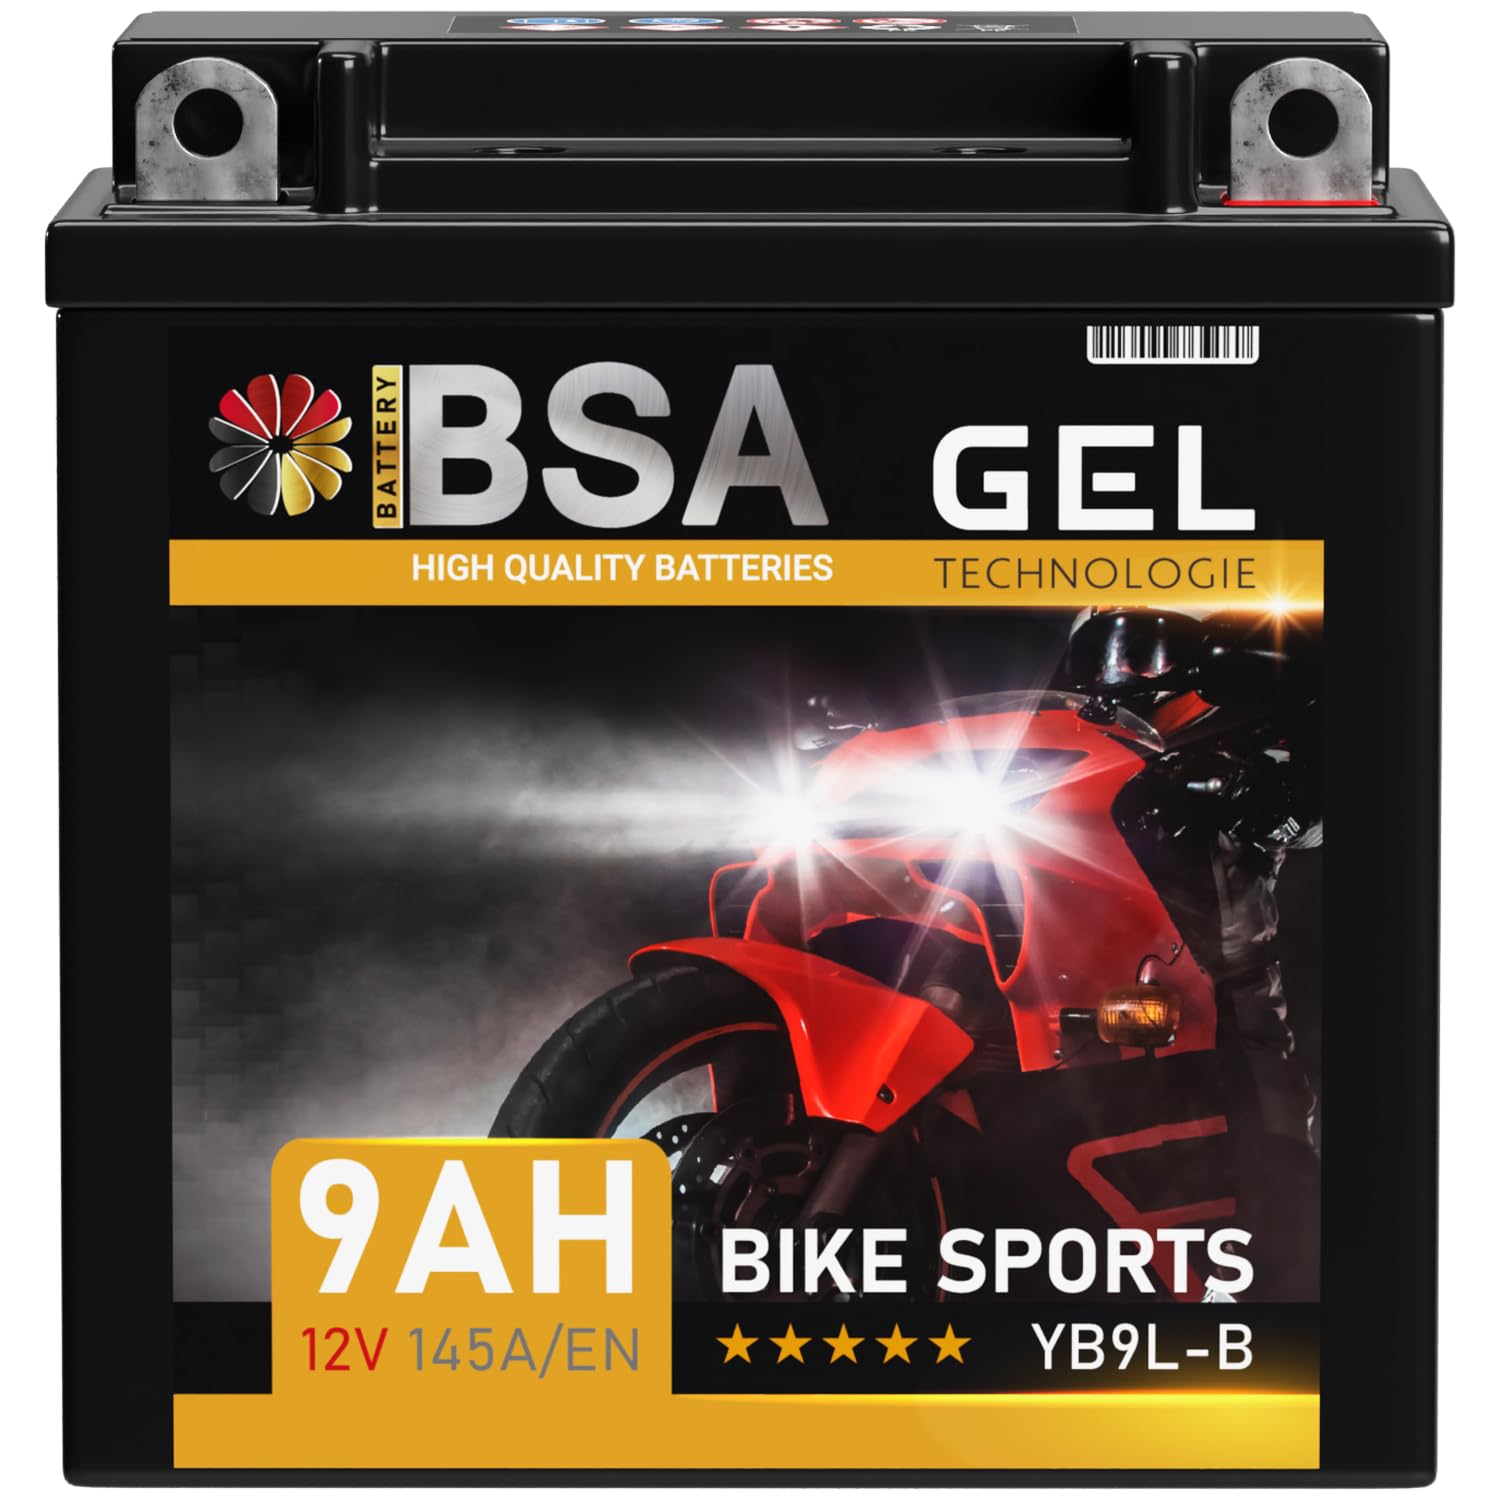 BSA YB9L-B GEL Roller Batterie 12V 9Ah 145A/EN Motorradbatterie doppelte Lebensdauer entspricht 50912 YB9L-A2 12N7-3B 12N9-3B vorgeladen auslaufsicher wartungsfrei von BSA BATTERY HIGH QUALITY BATTERIES